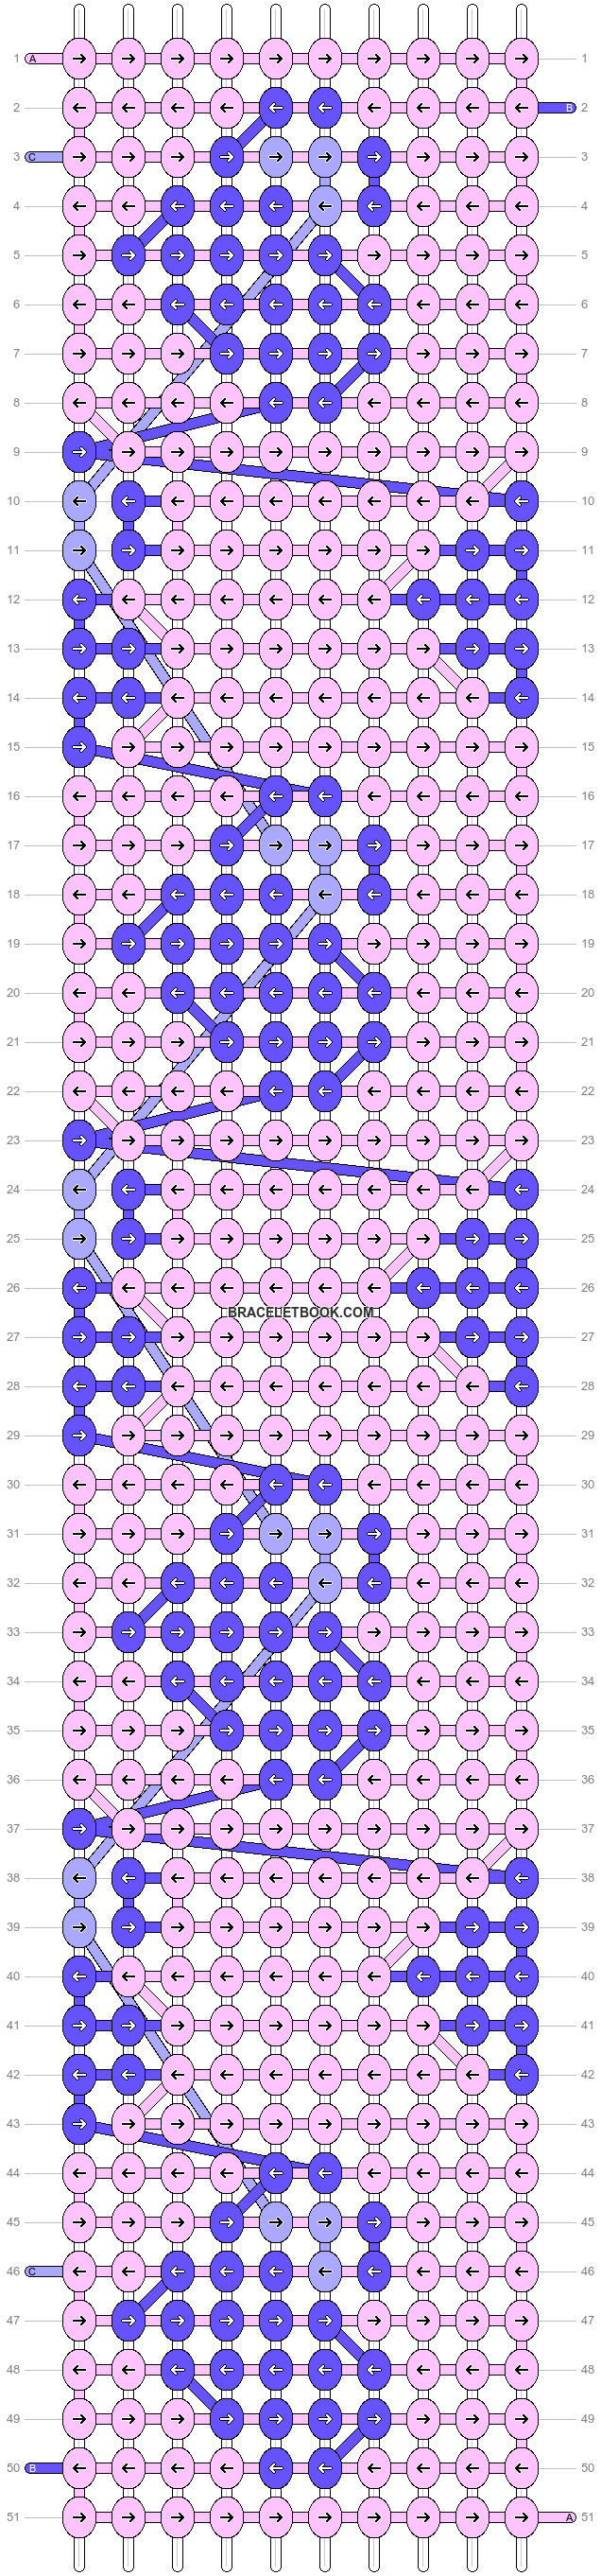 Alpha pattern #80530 variation #146329 pattern